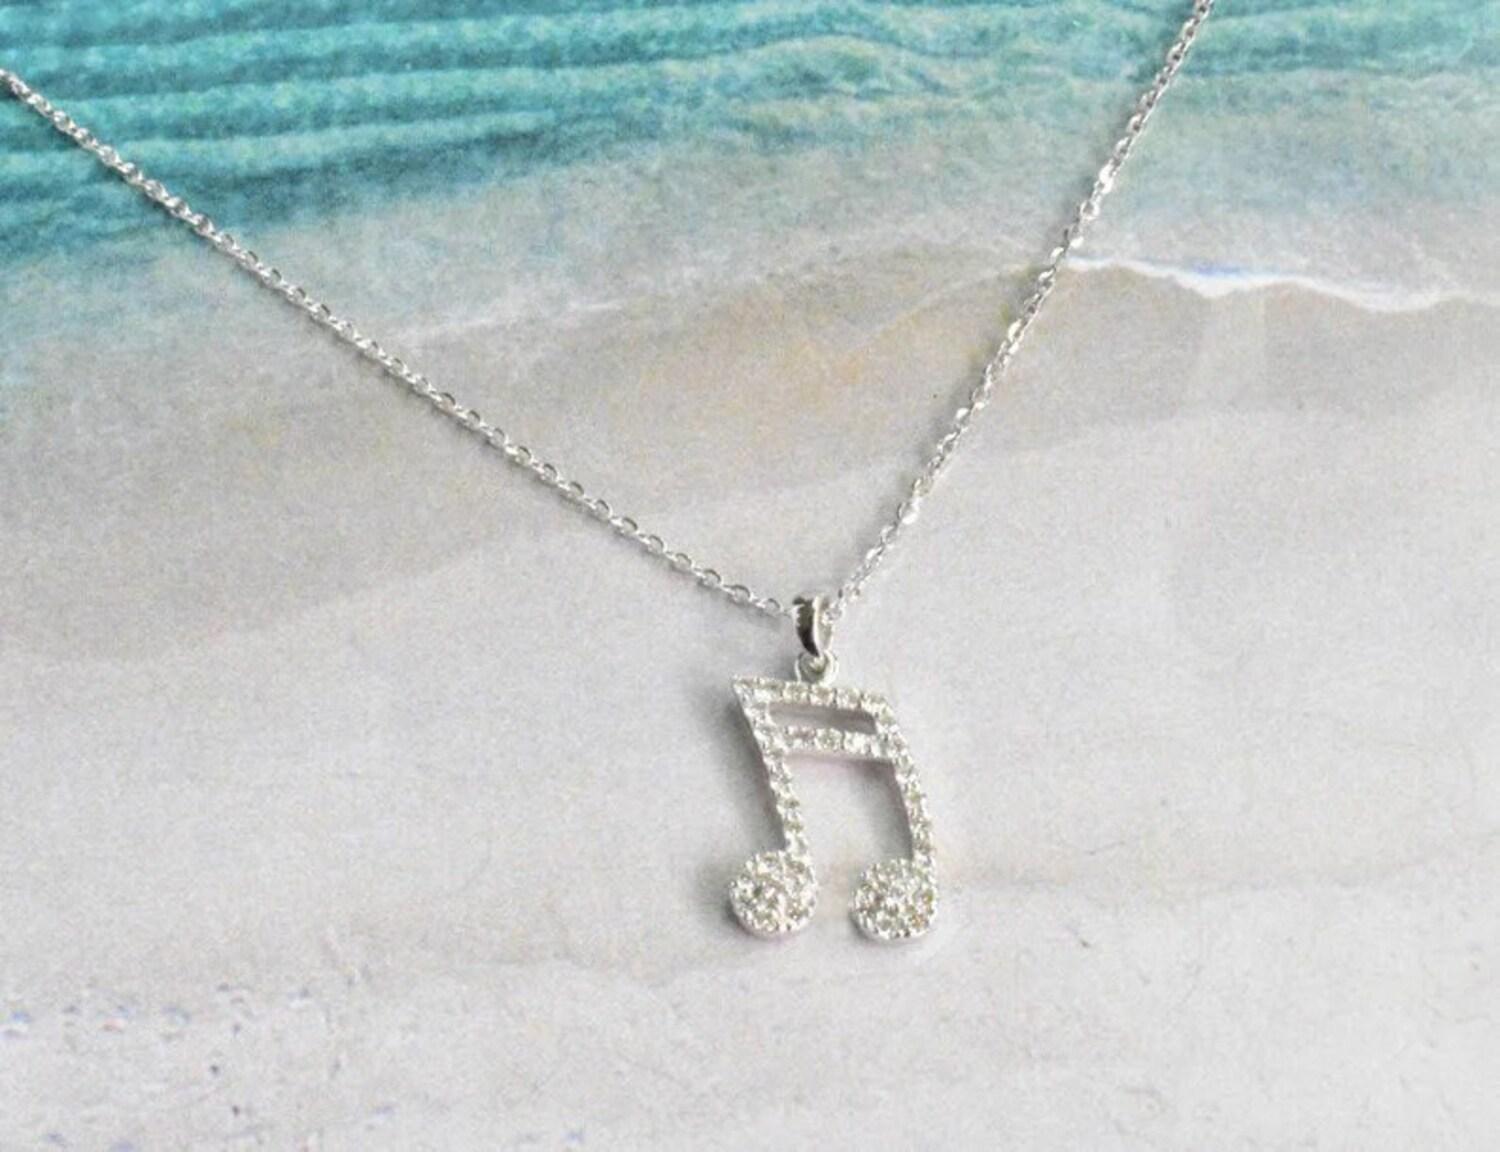 music symbol necklace